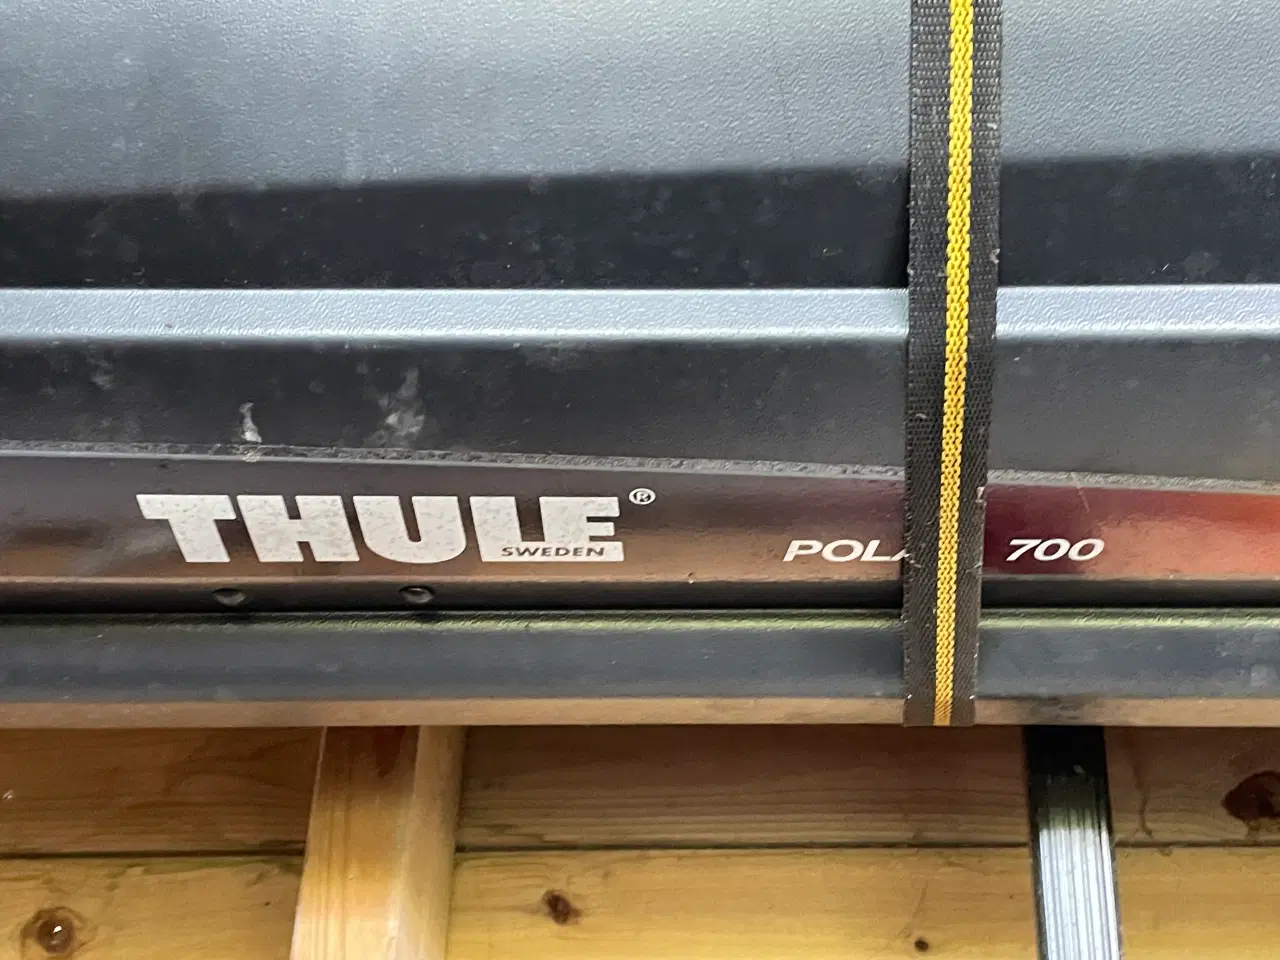 Billede 2 - Thule tagboks med originale Volvo/Thule tagbøjler